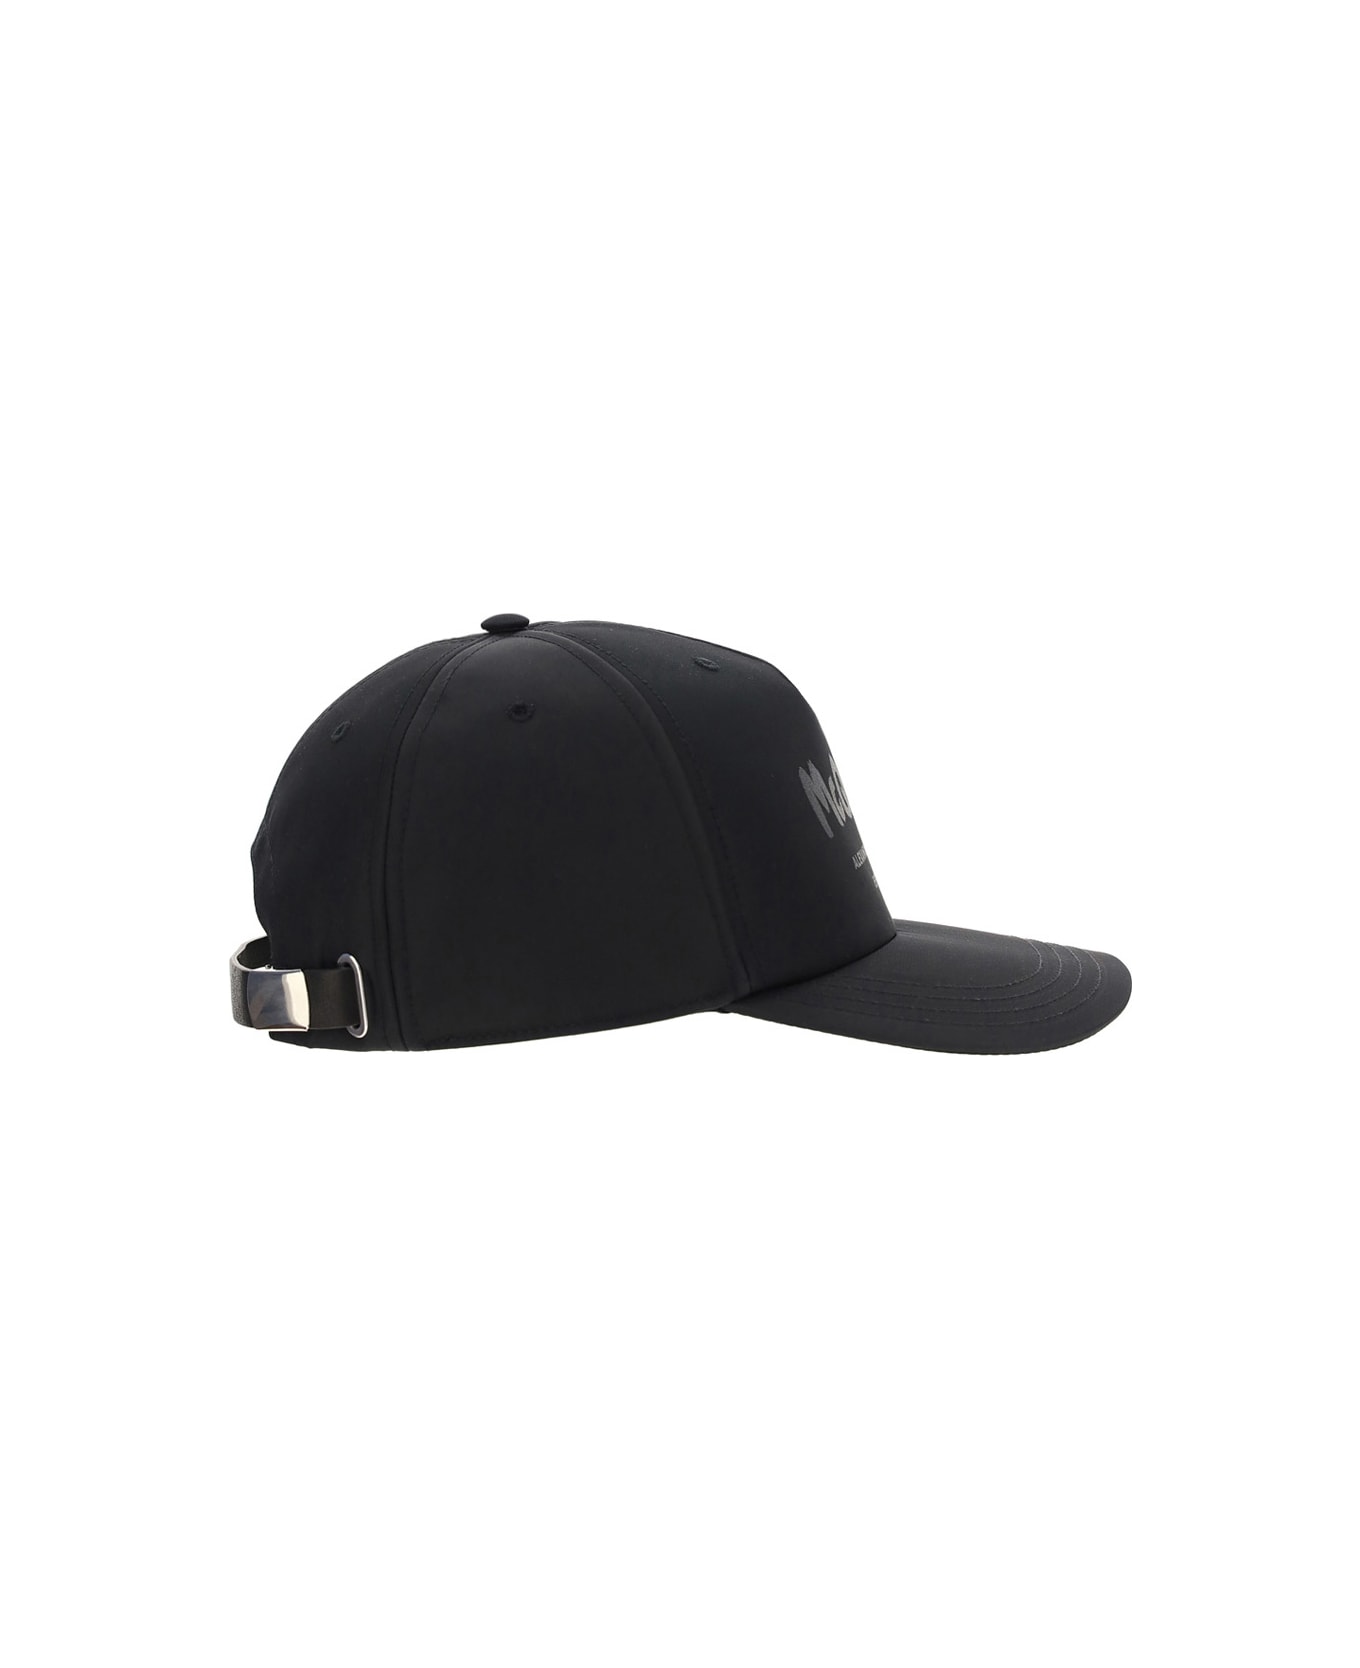 Alexander McQueen Logo Print Baseball Cap - Black